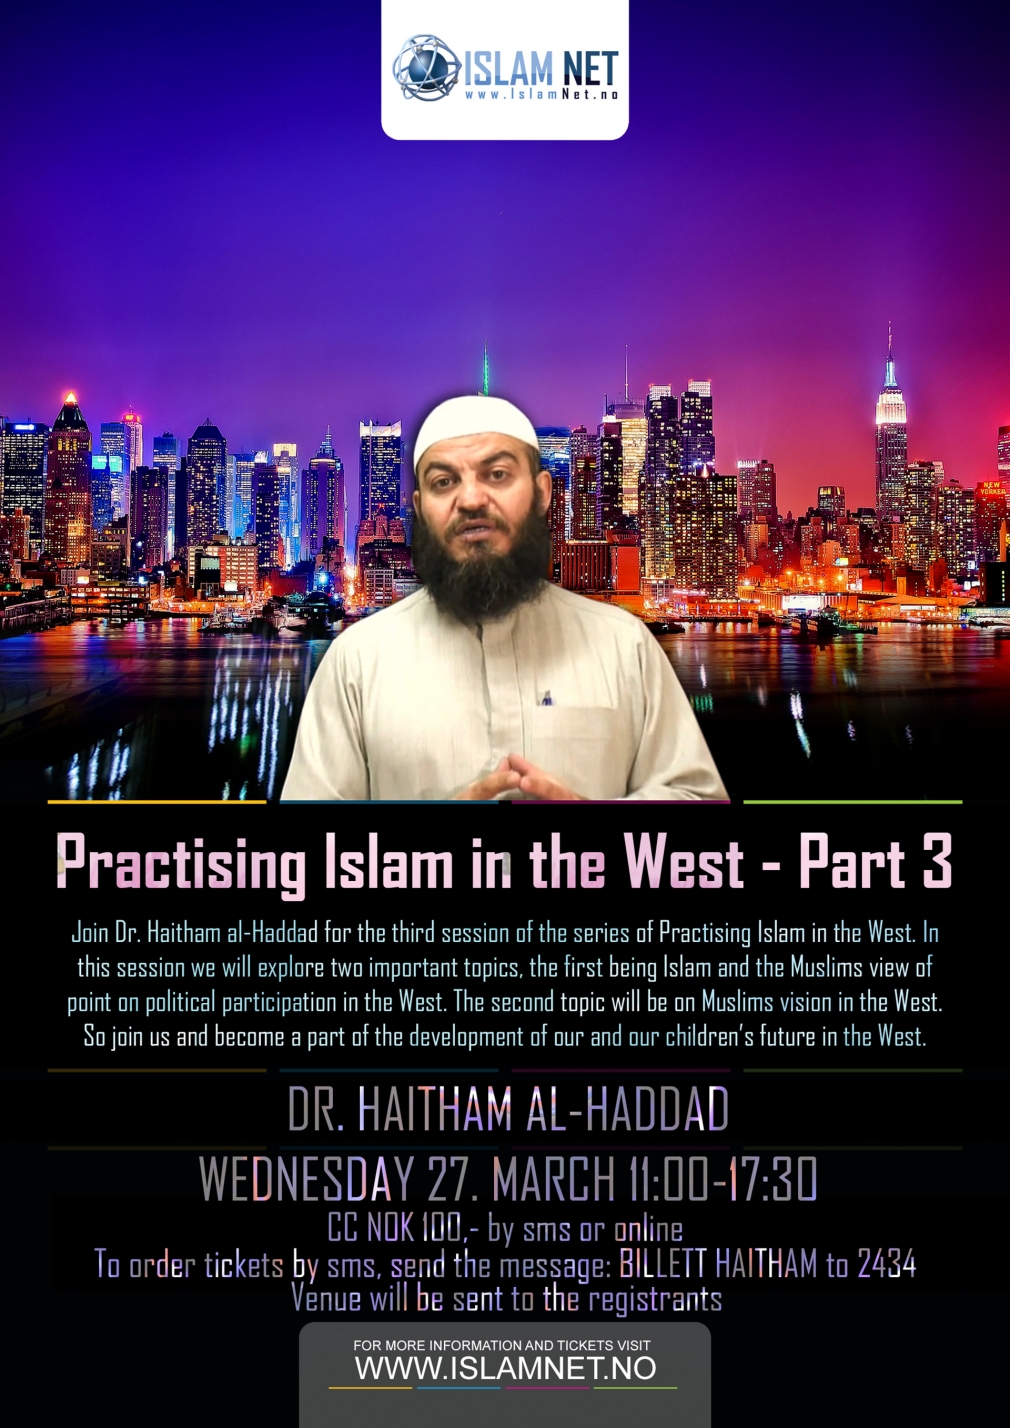 Practising Islam in the West - Part 3 - Sh. Haitham al-Haddad